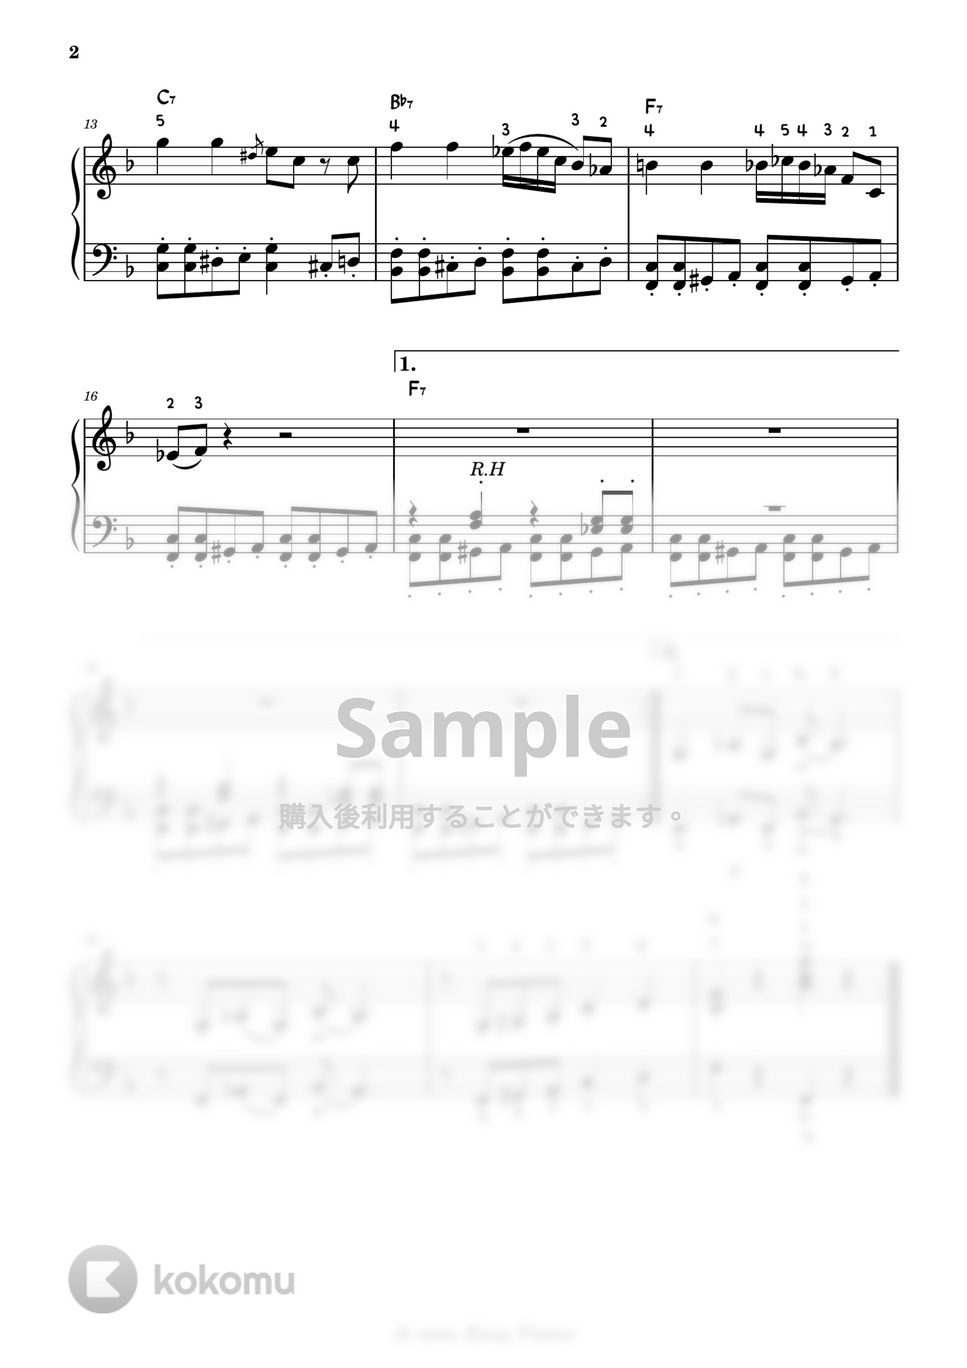 Henry Mancini - Baby Elephant Walk(子象の行進) (ピアノ両手 / 指番号あり) by A-sam